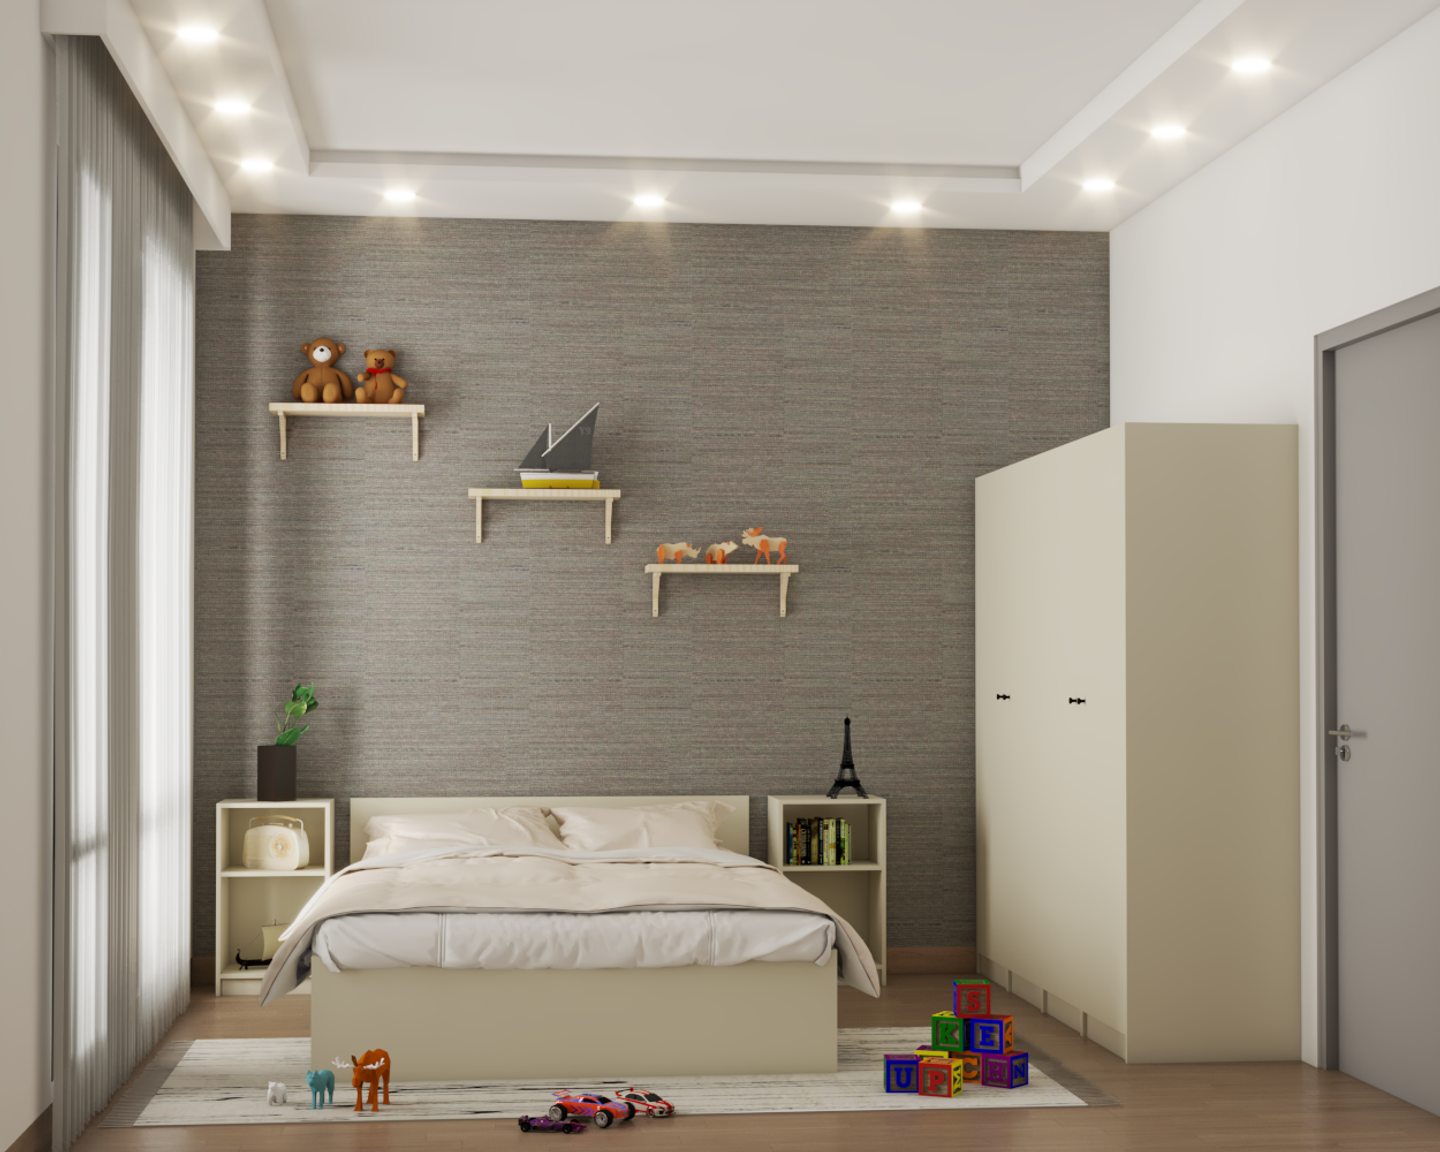 Bedroom False Ceiling With Spotlights - Livspace